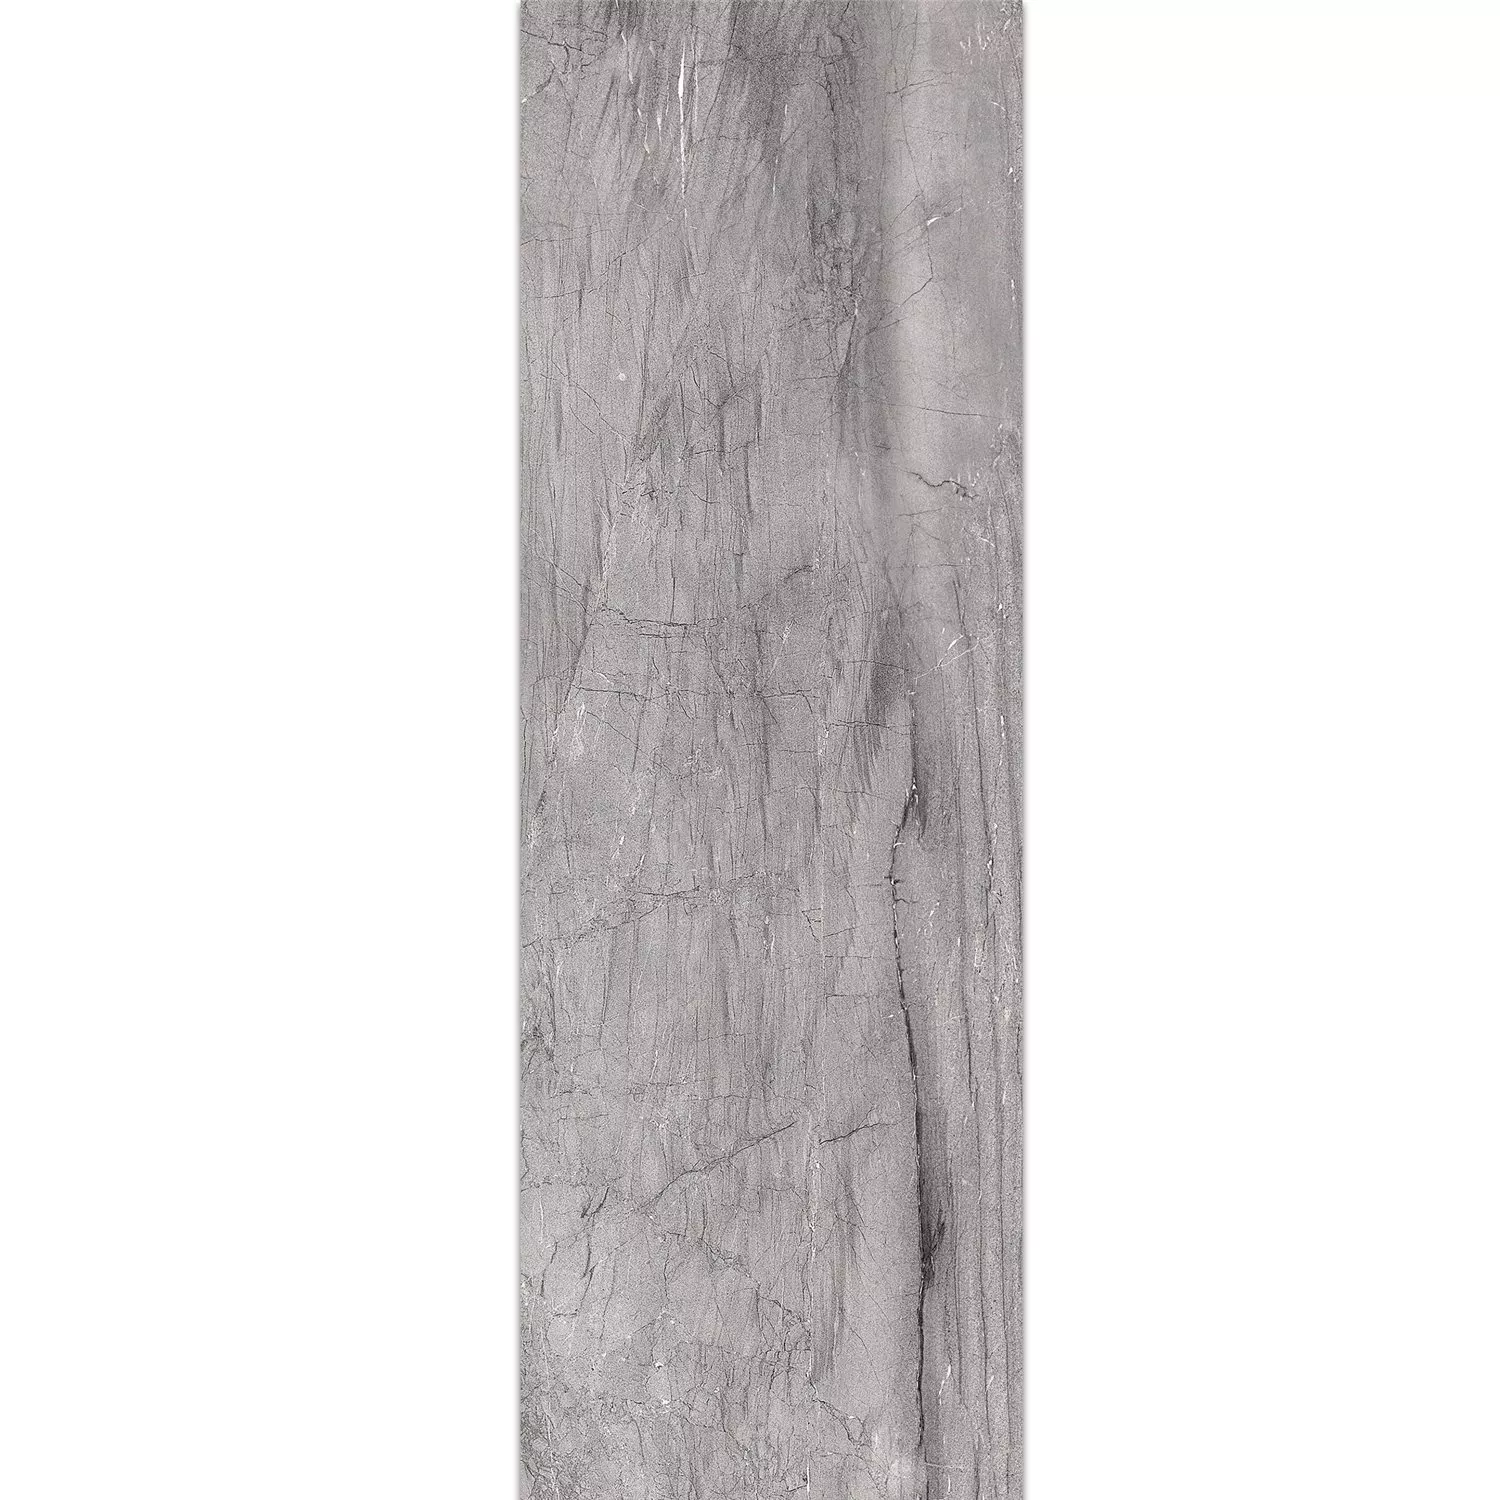 Campione Rivestimenti Capitol Grey 25x75cm